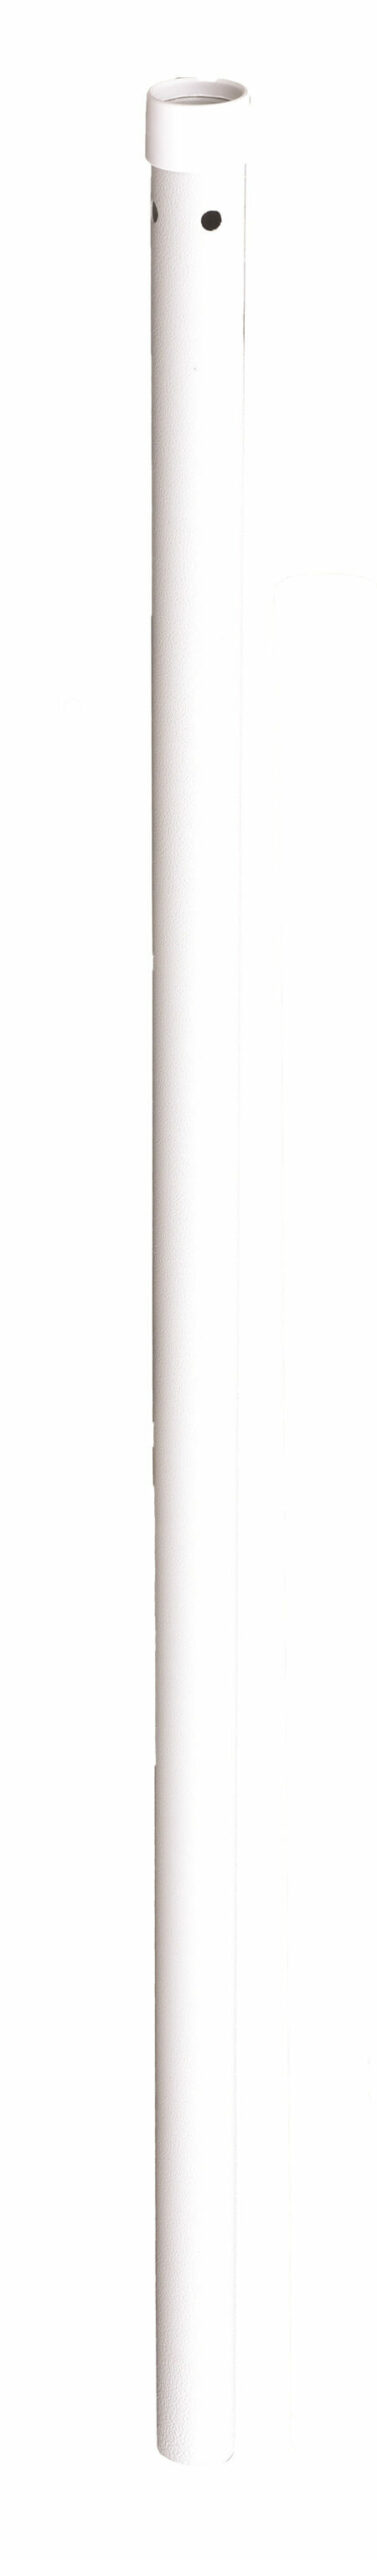 44″ Umbrella Extension Pole